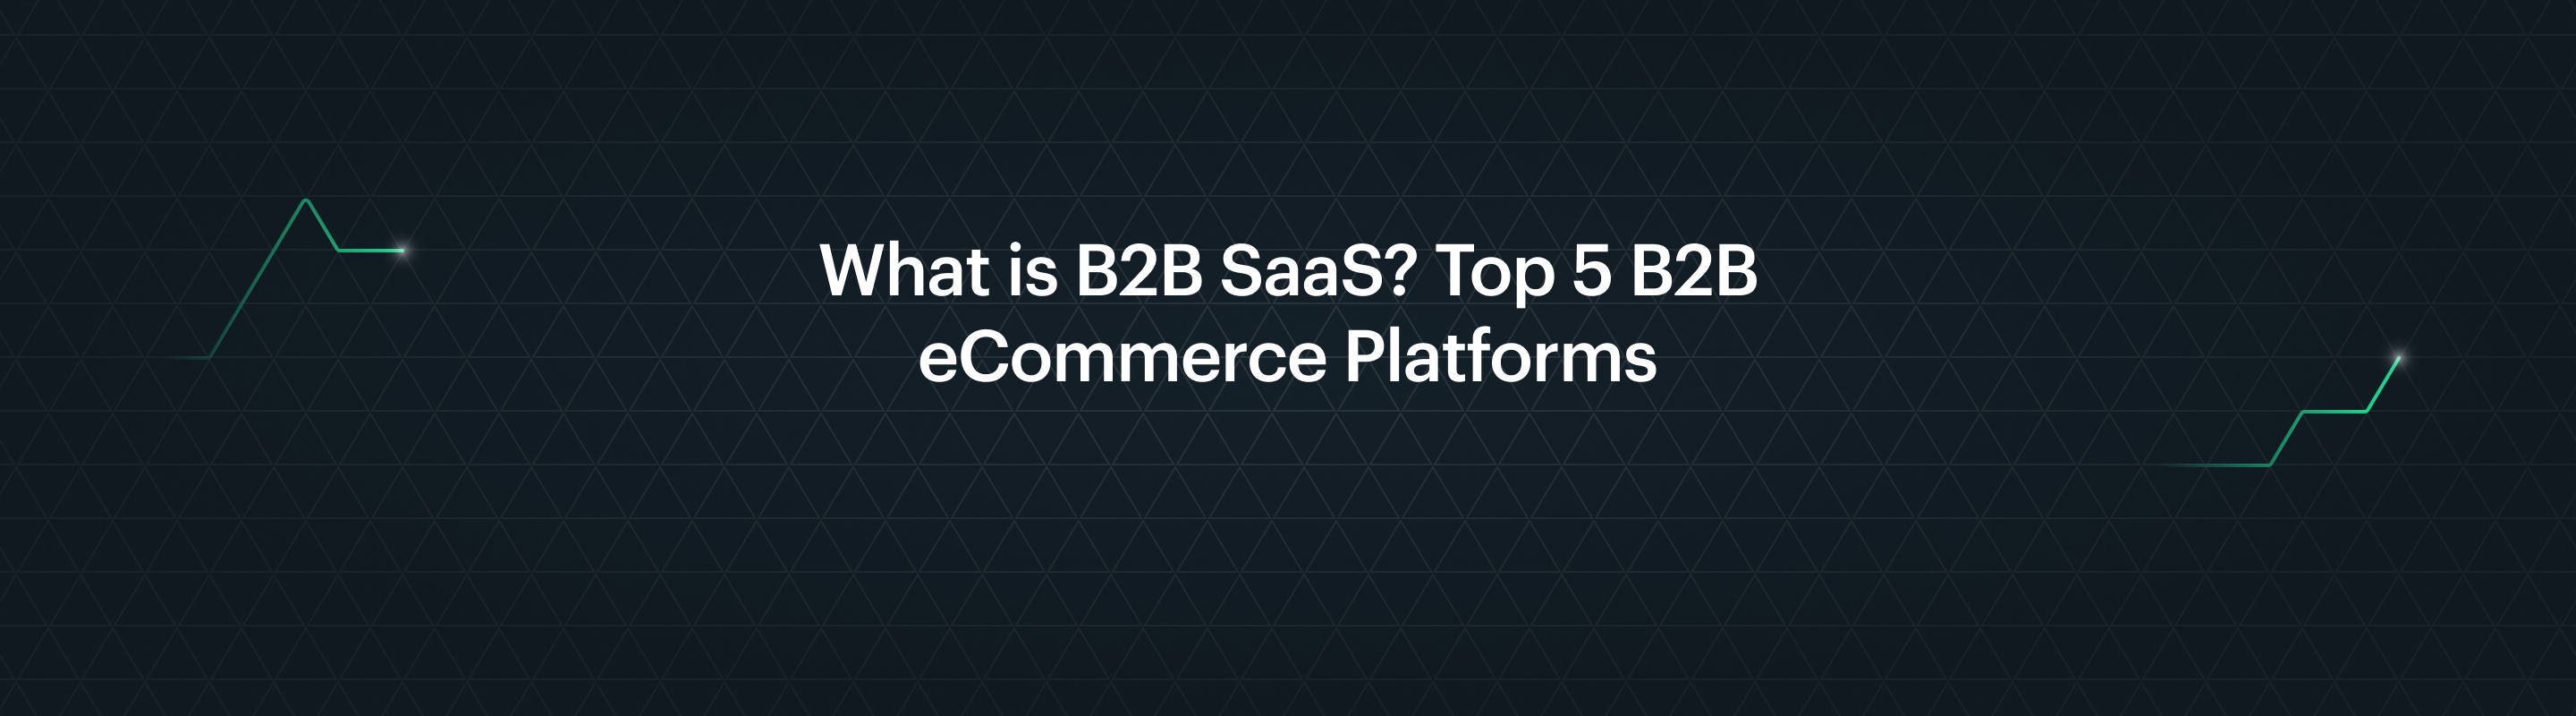 Top 5 B2B e-commerce platforms